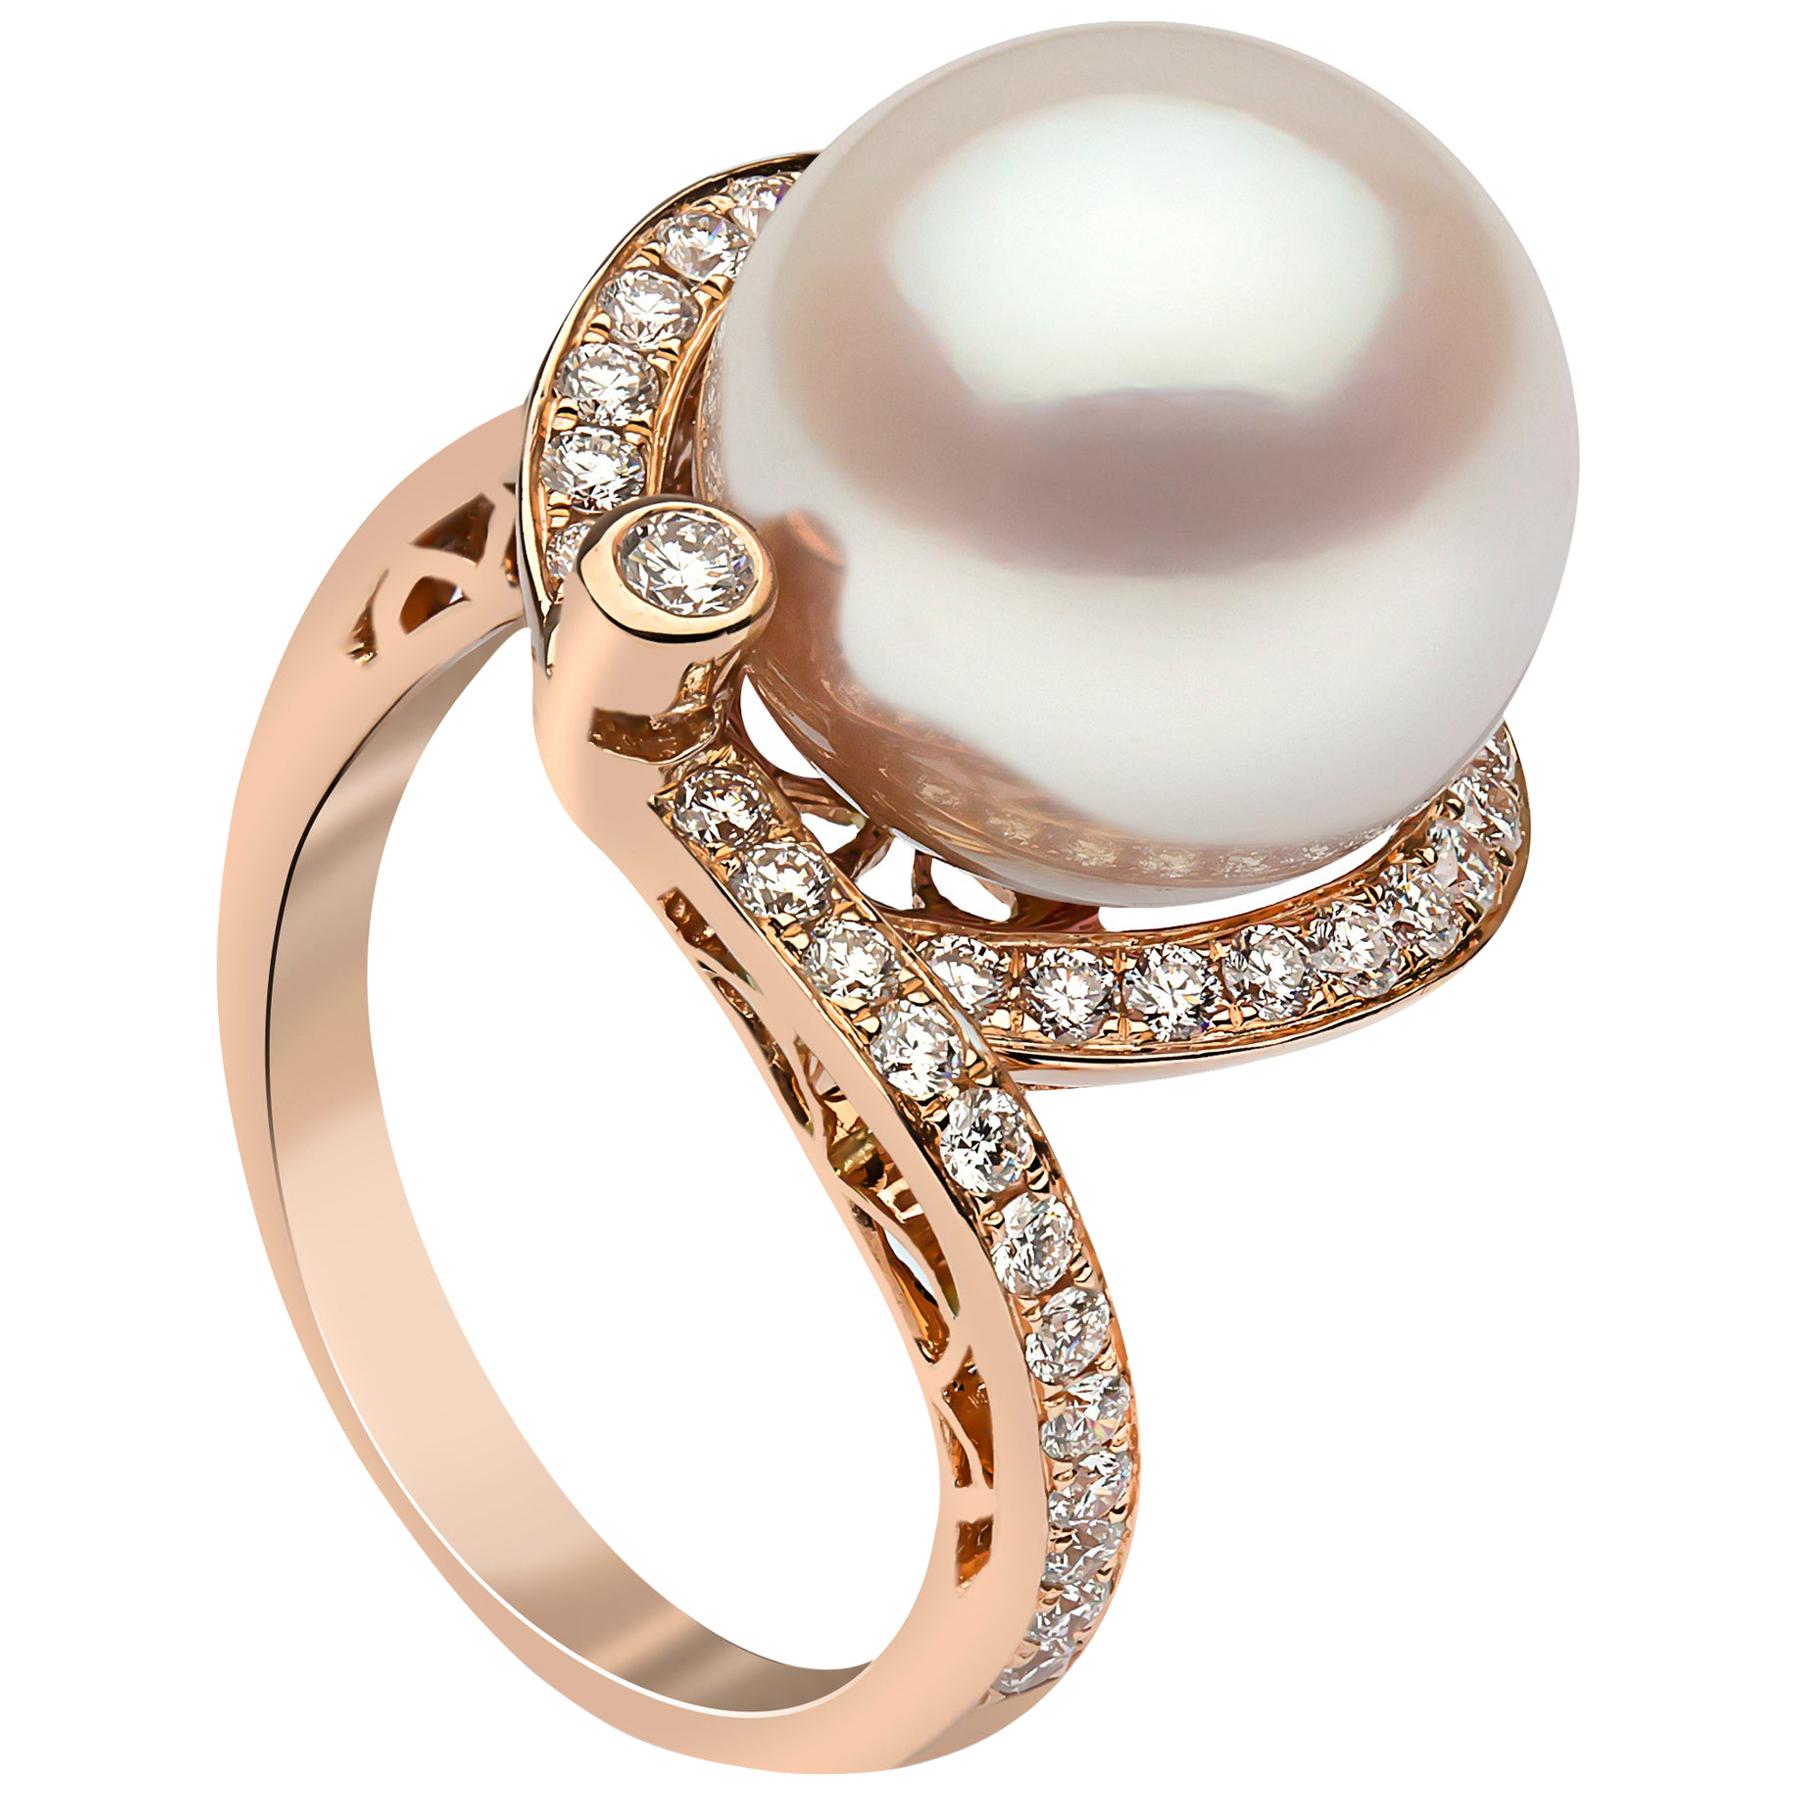 Yoko London South Sea Pearl and Diamond Ring in 18 Karat Rose Gold